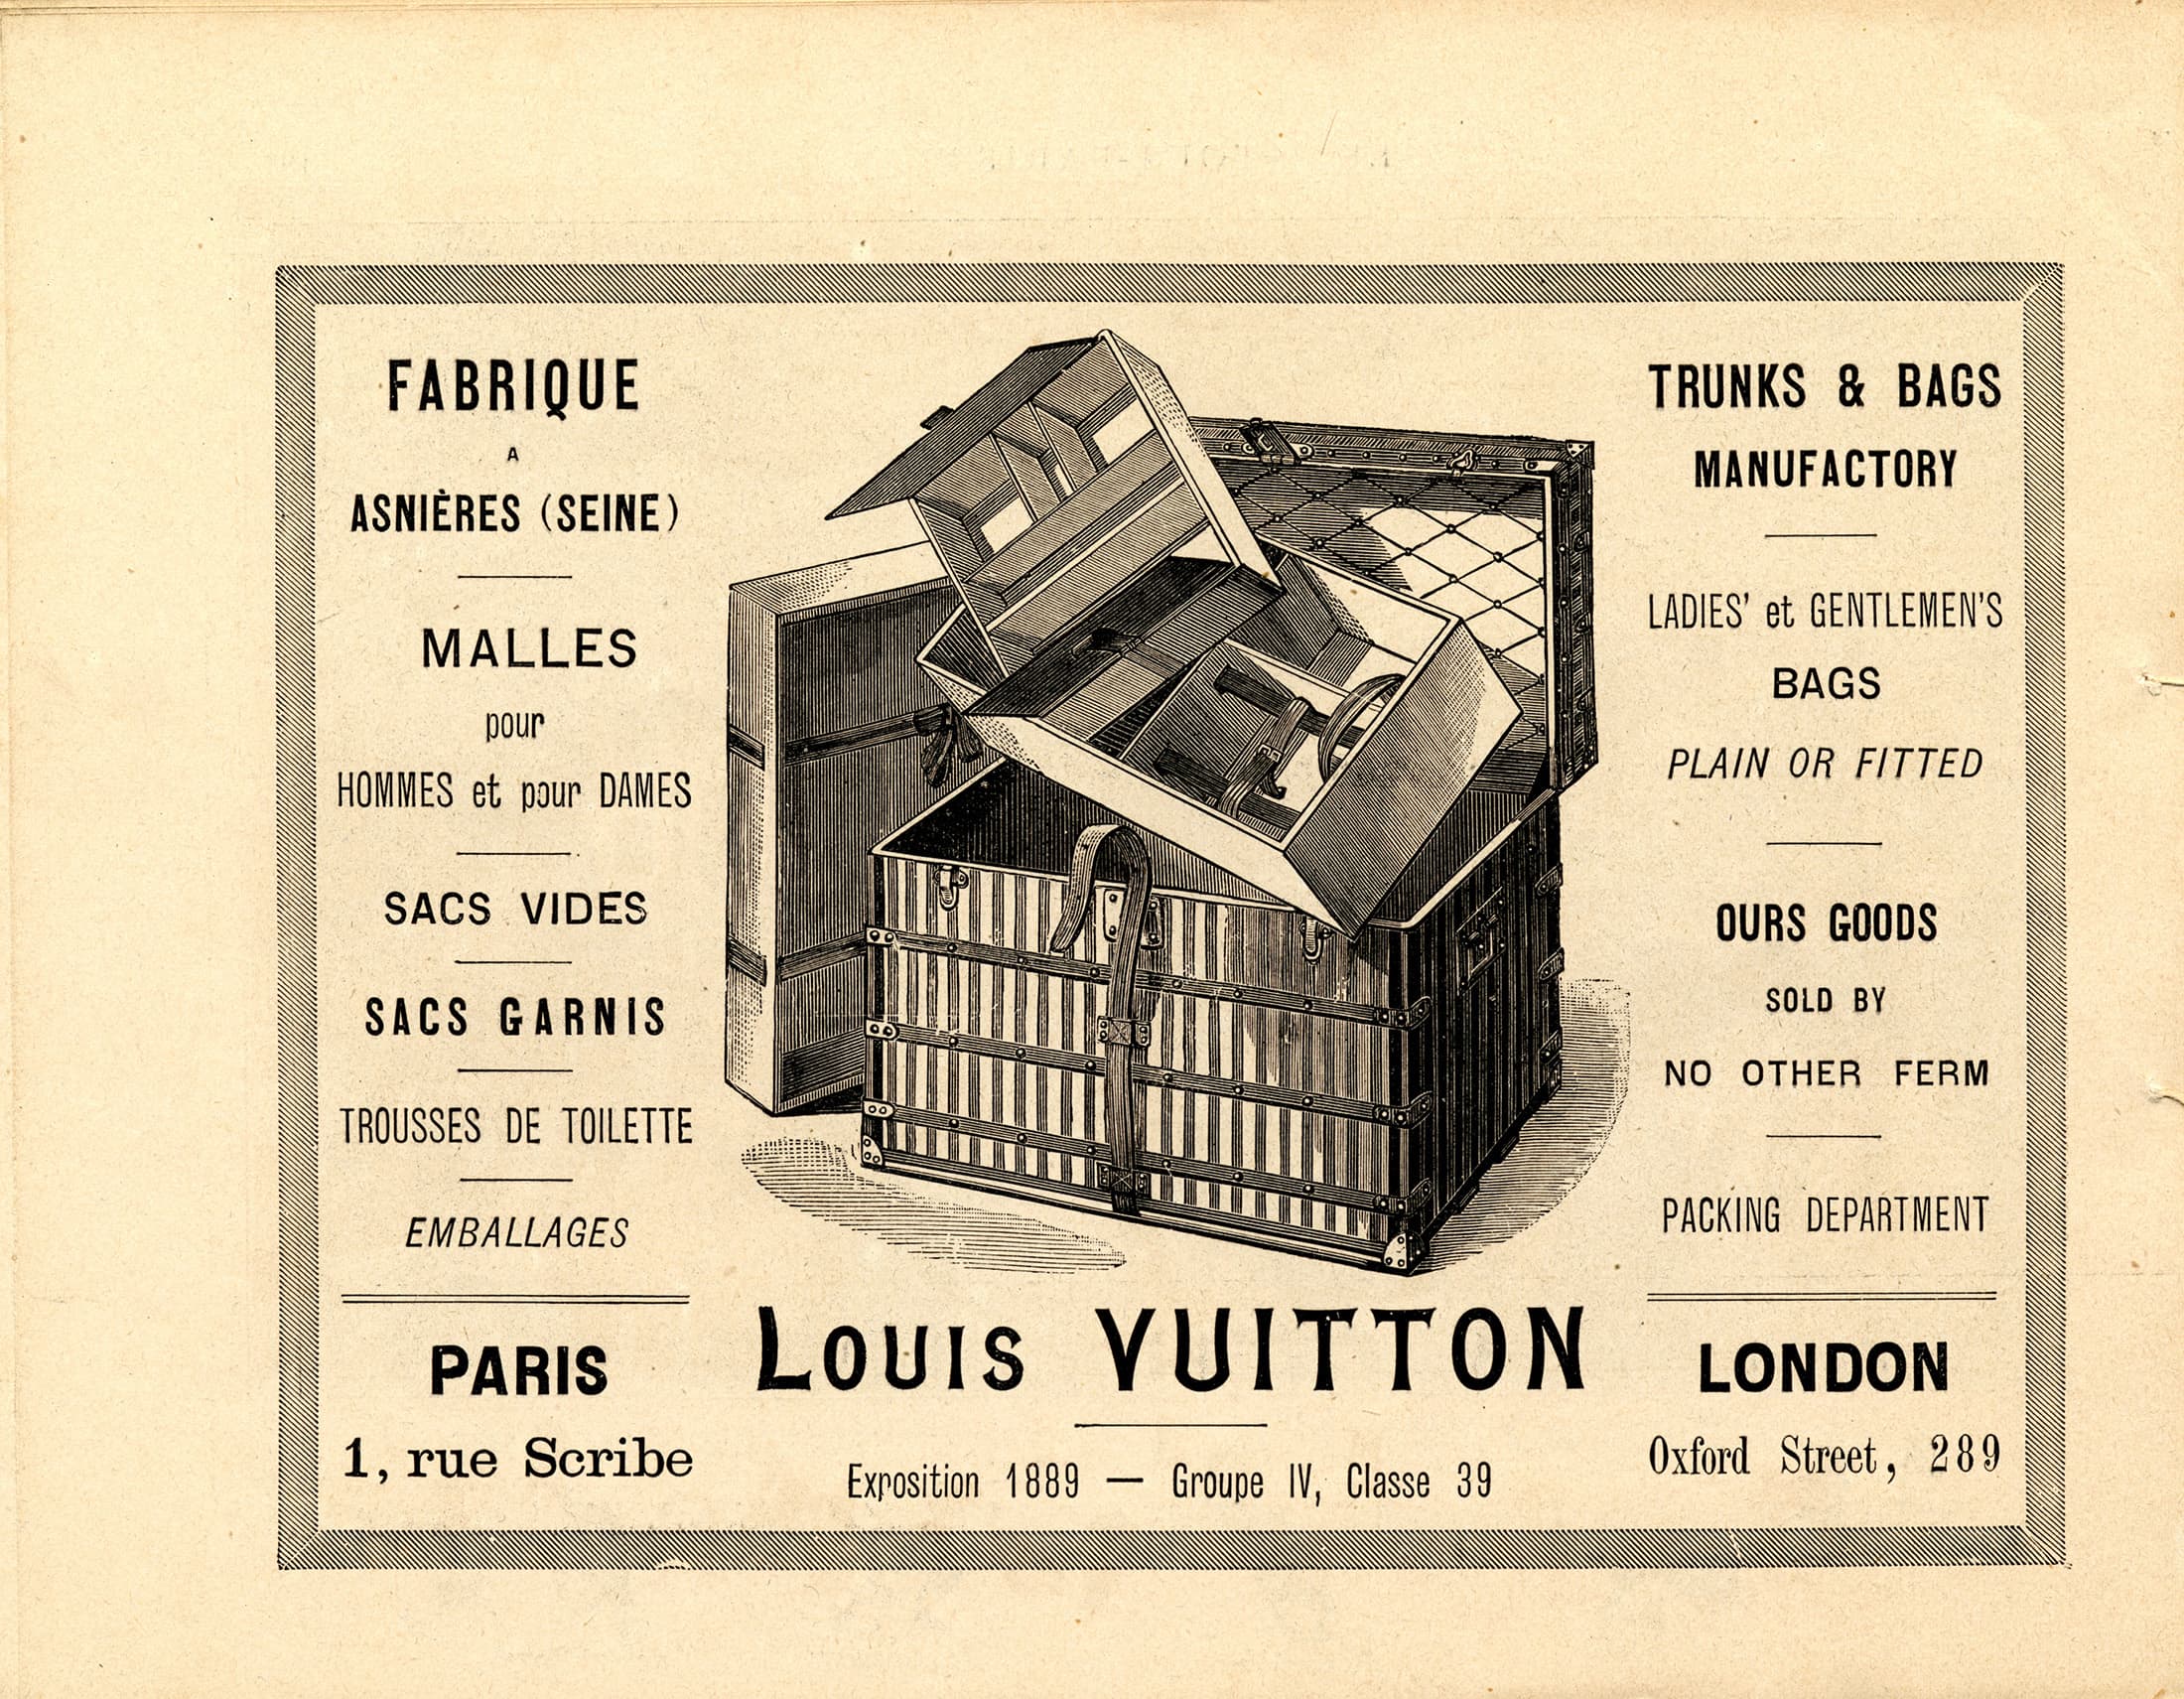 Louis 200: Celebrating Louis Vuitton's founder's birthday with